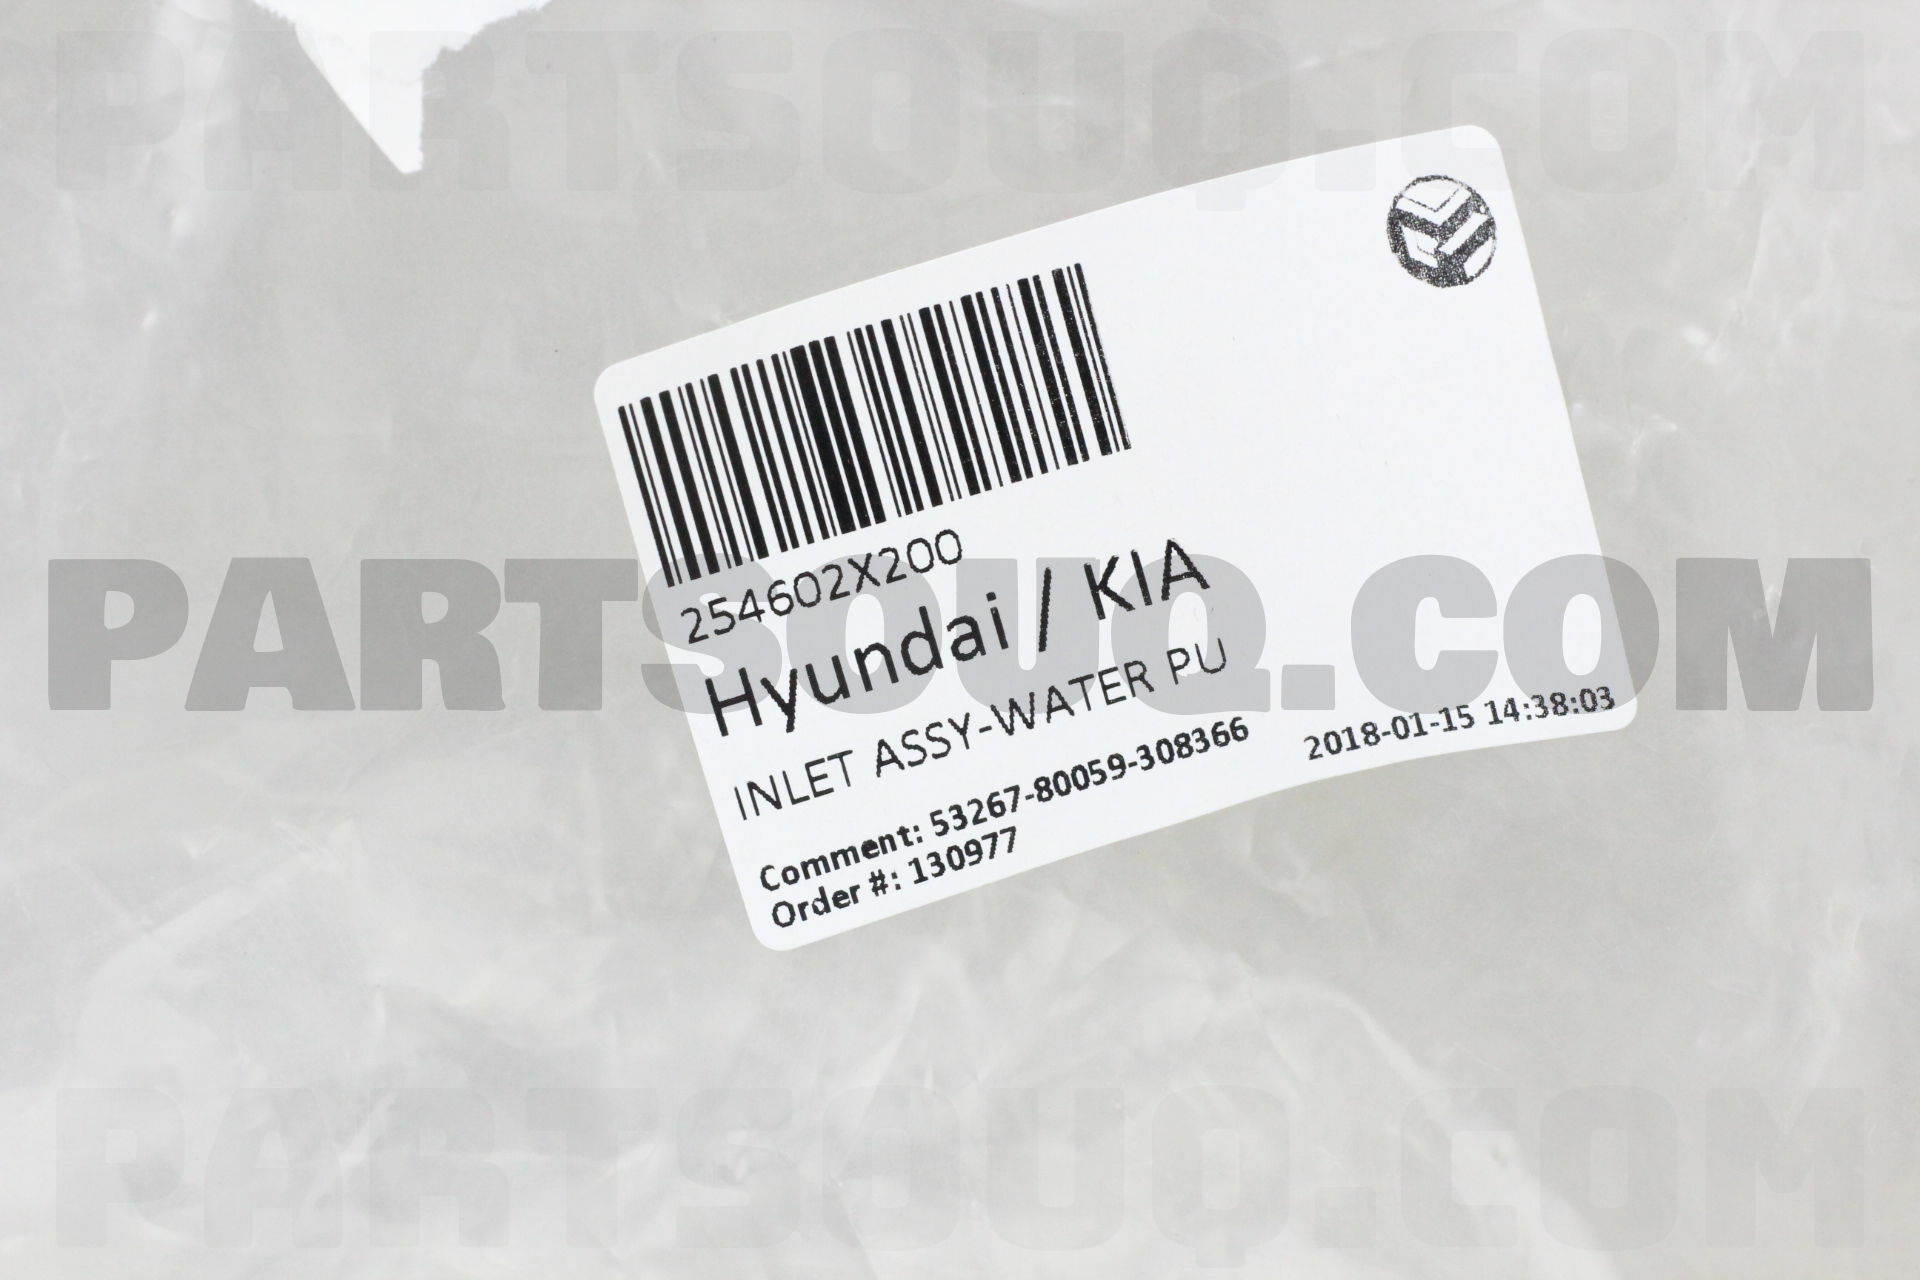 Inlet Assy-Water Pu 254602X200 | Hyundai / Kia Parts | Partsouq